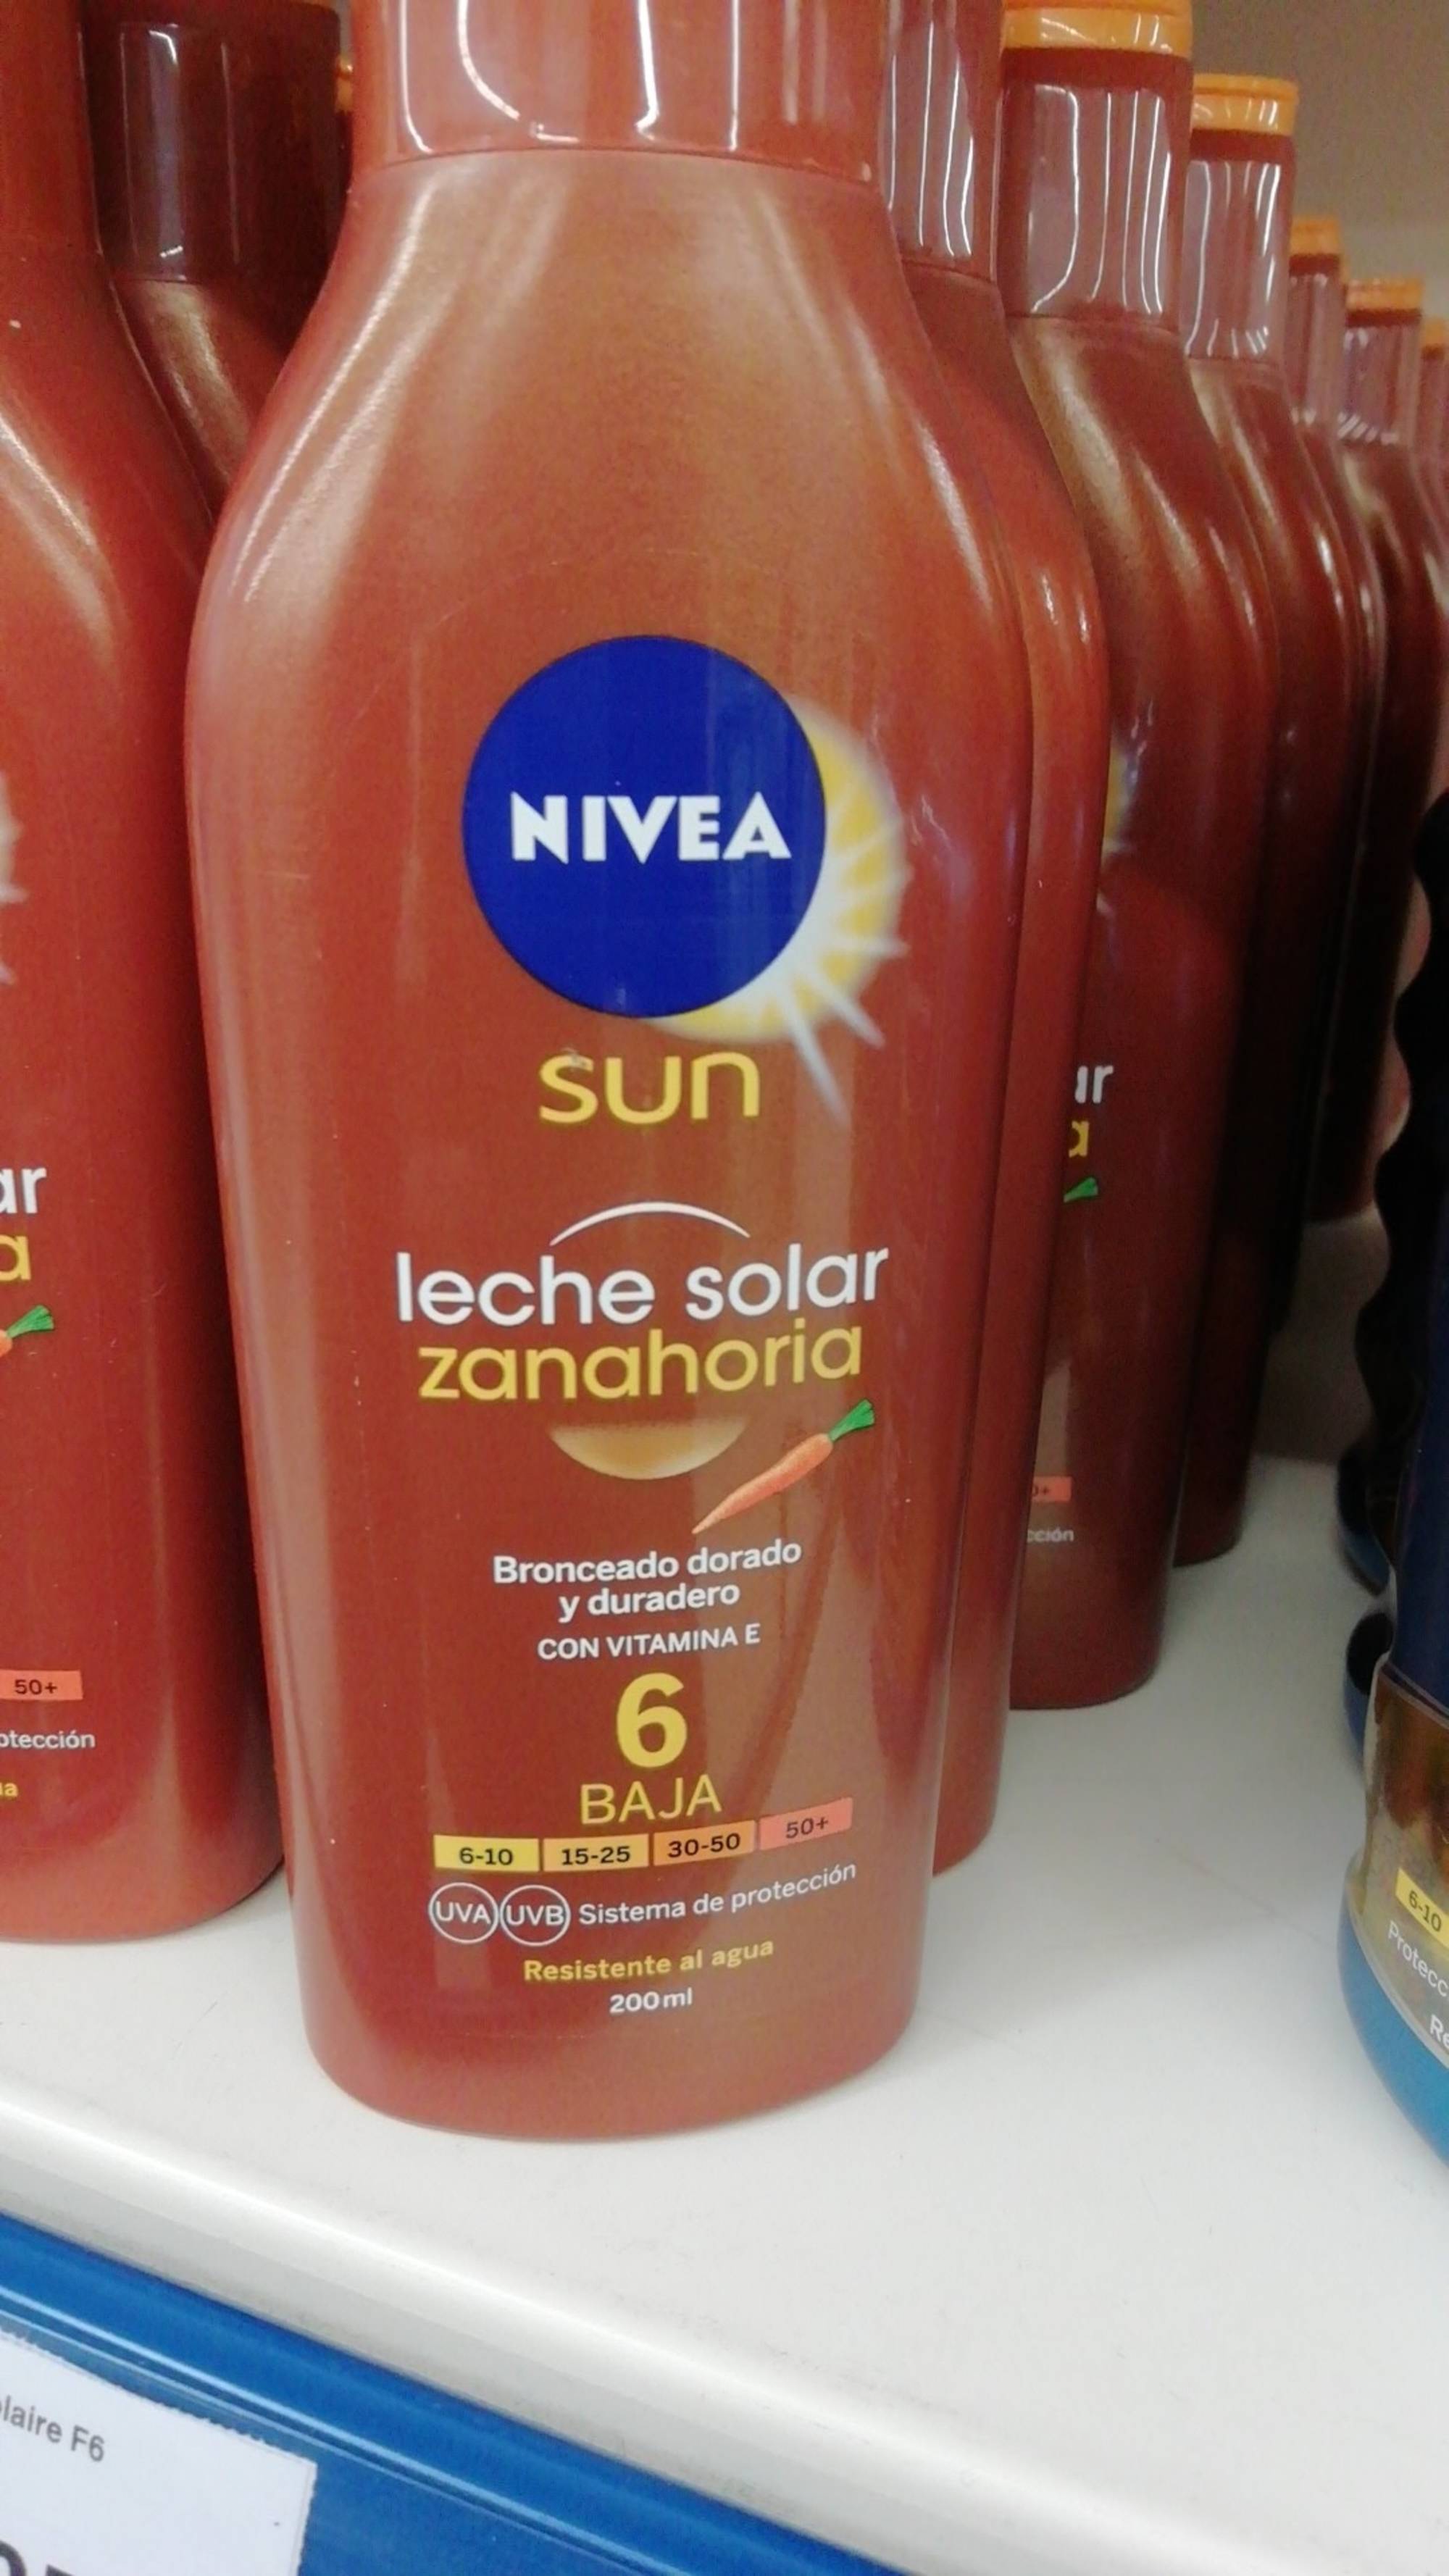 NIVEA - Sun - Leche solar zanahoria 6 baja